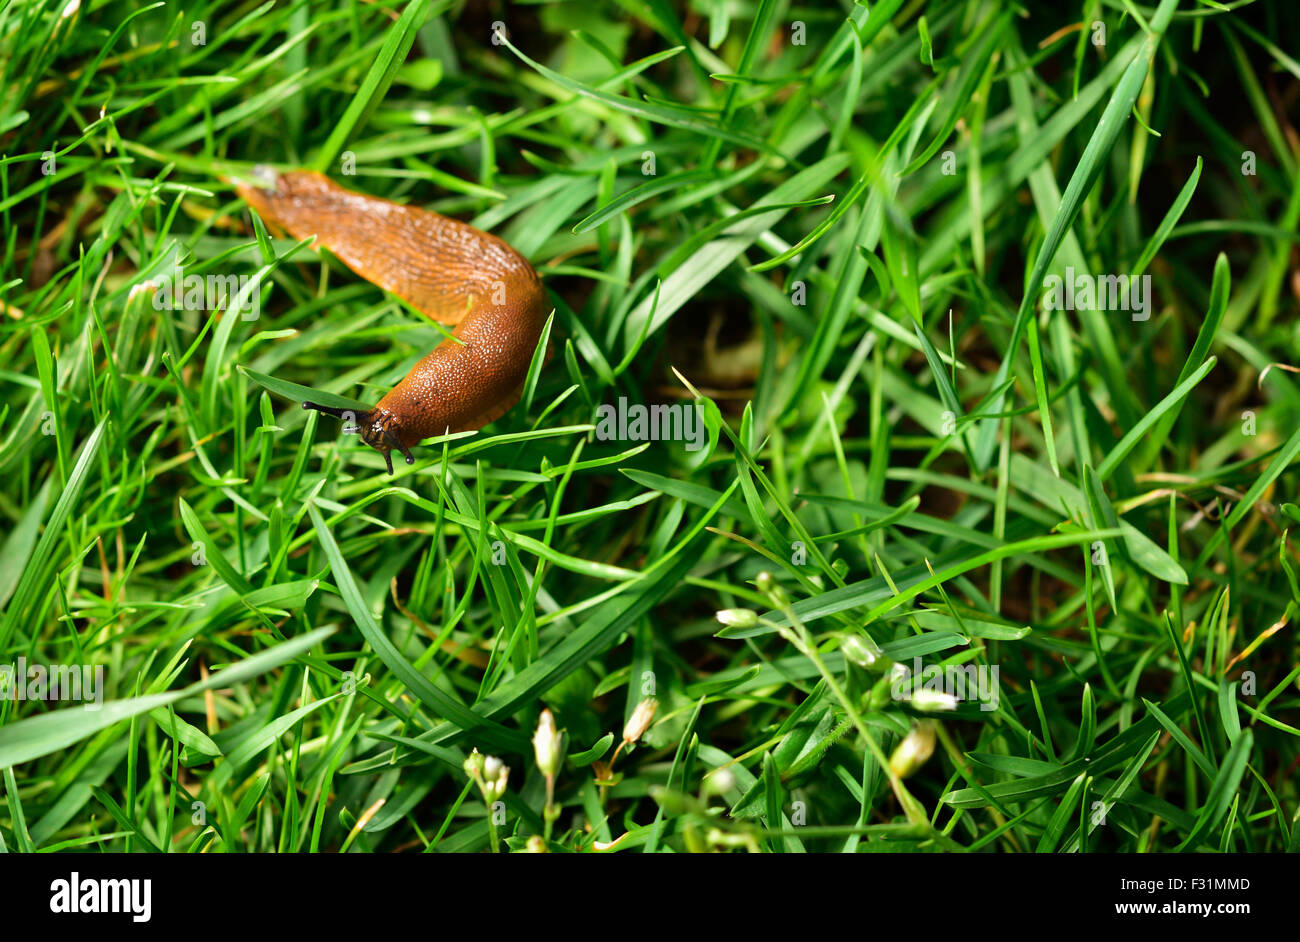 Spanish slug (Arion vulgaris) invasion in garden. Invasive slug on grass. Garden problem. Europe. Copy space. Stock Photo